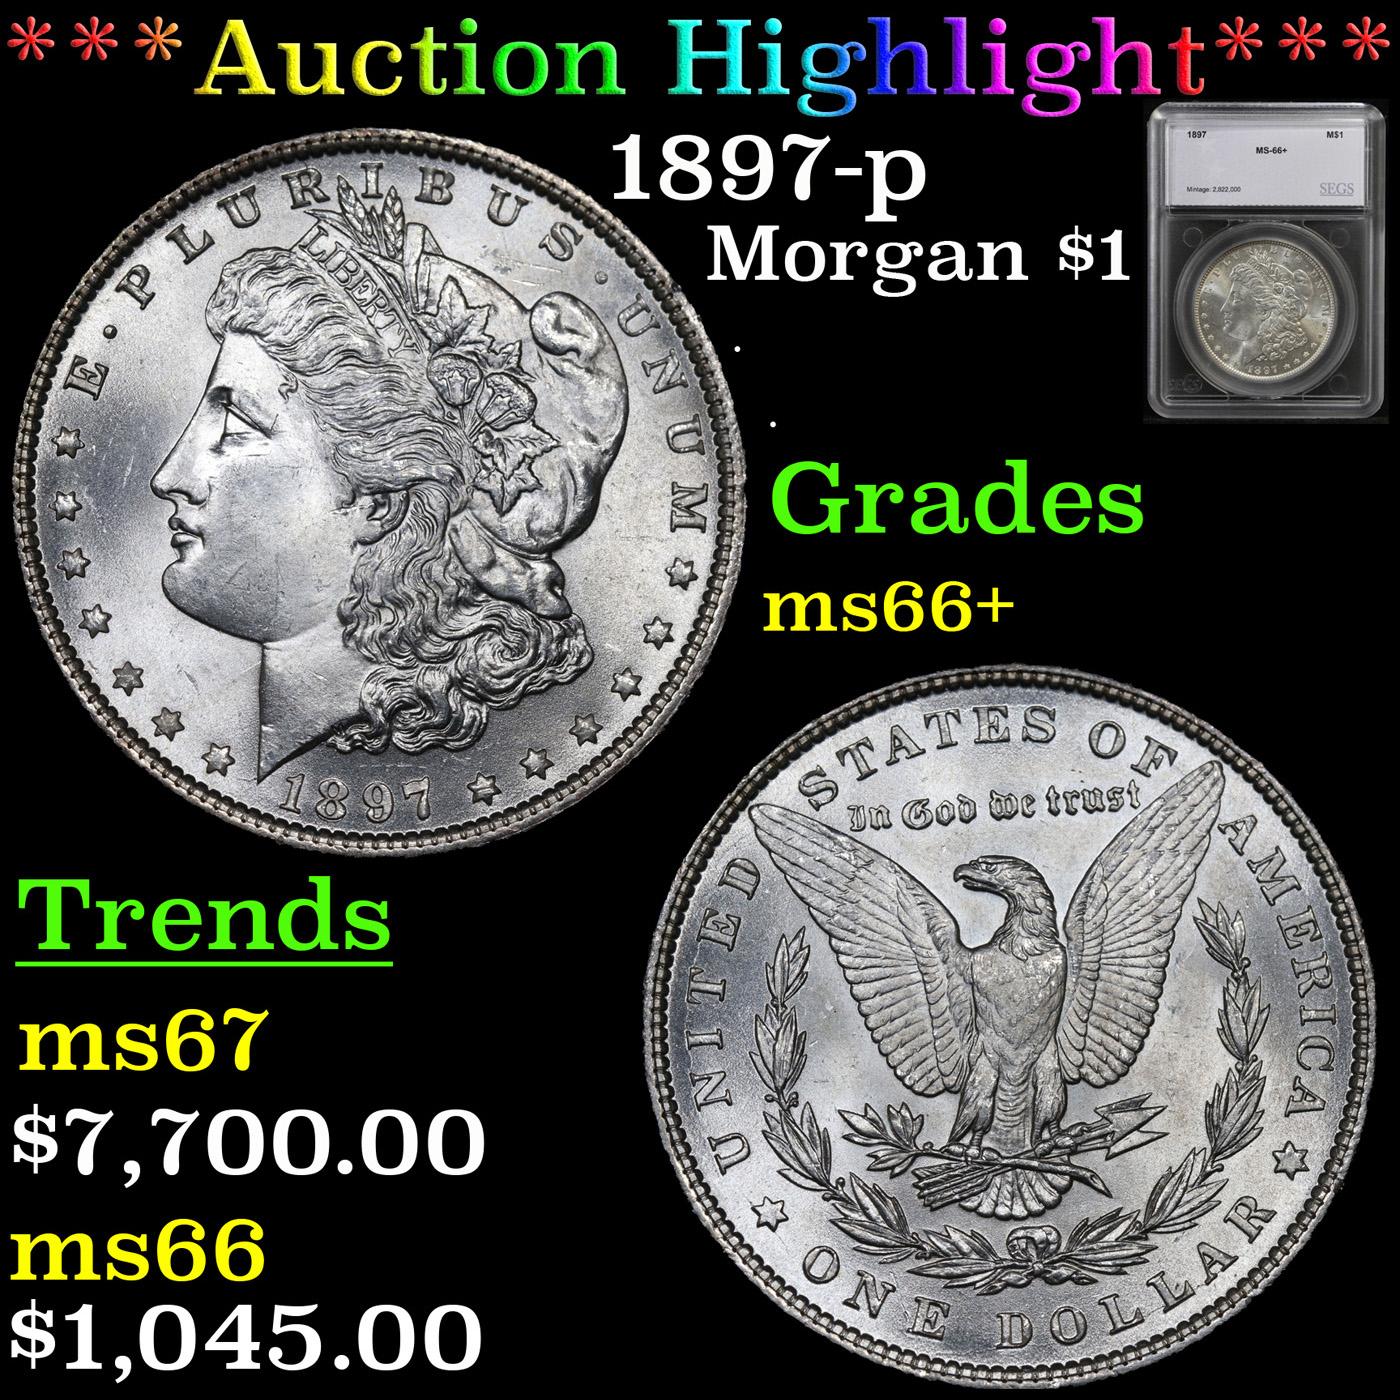 ***Auction Highlight*** 1897-p Morgan Dollar $1 Graded ms66+ by SEGS (fc)